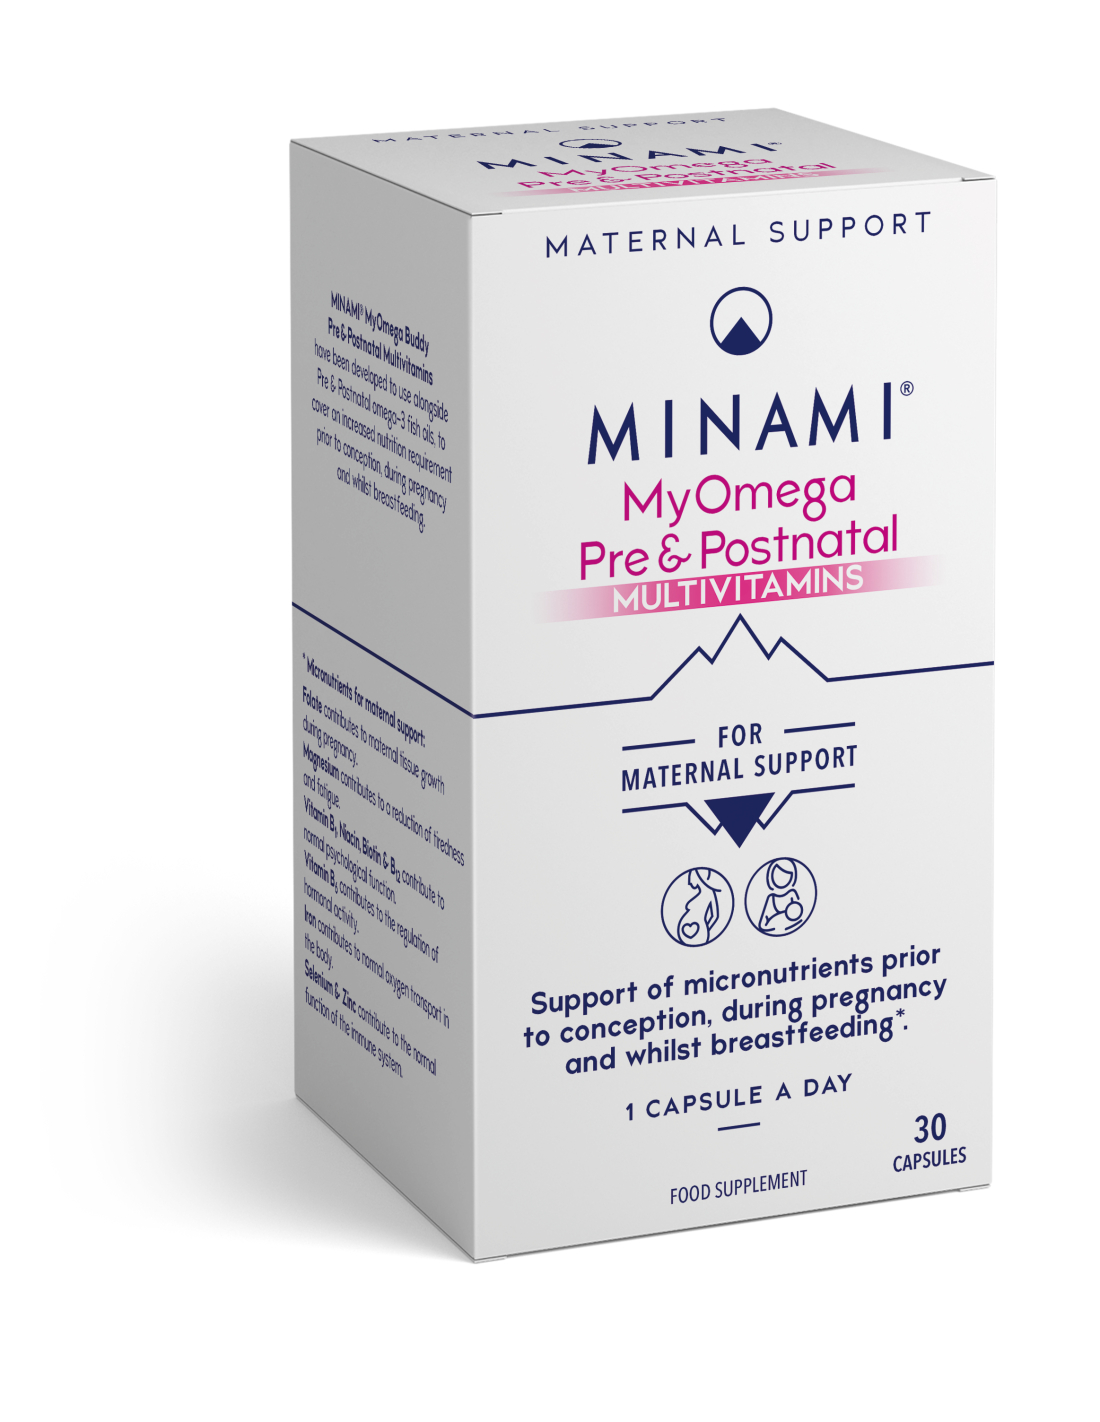 Minami MyOmega Pre & Postnatal Multivitamin (30 db kapszula)